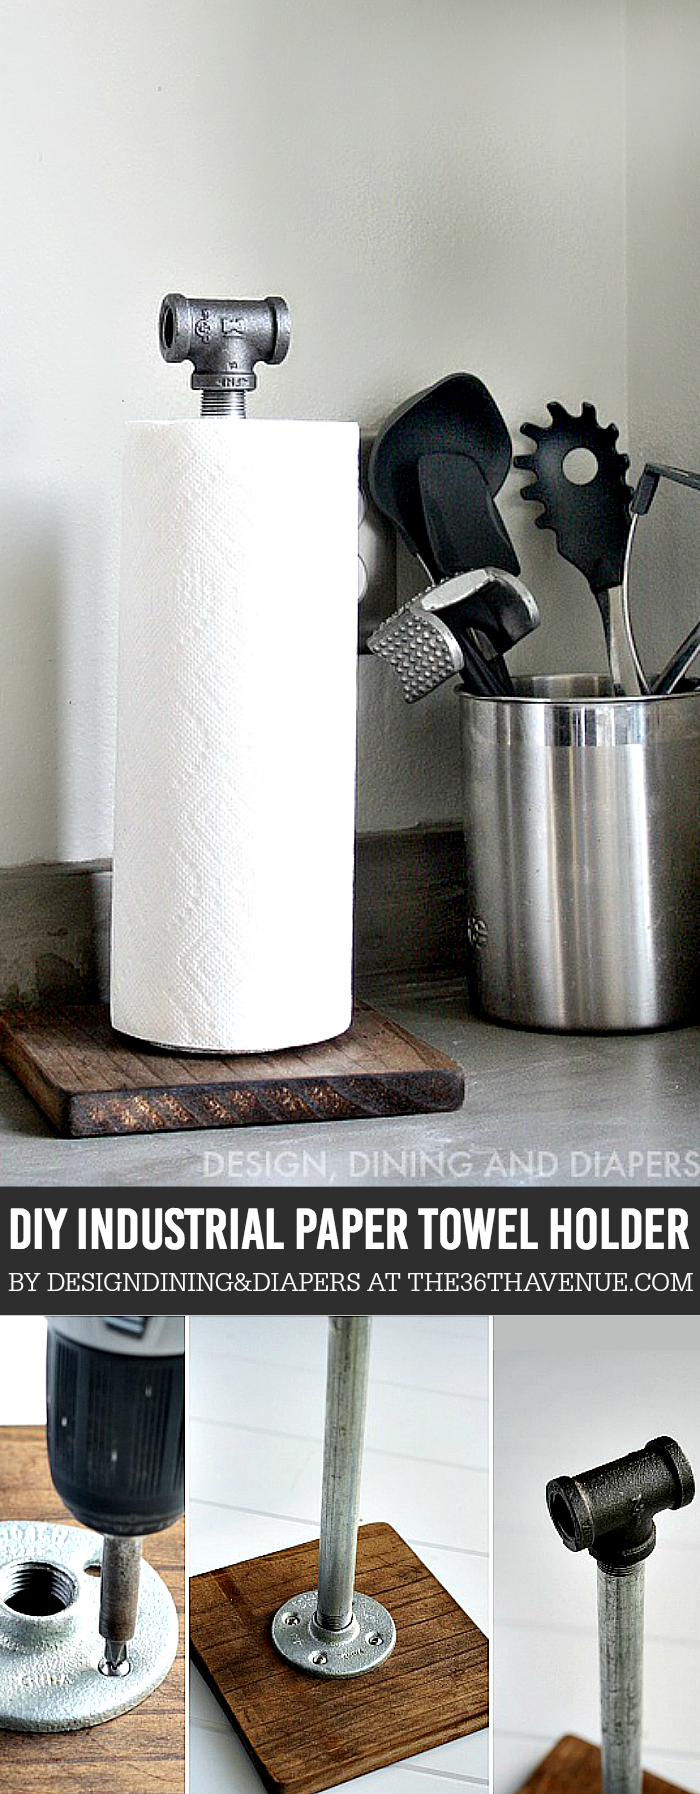 https://www.the36thavenue.com/wp-content/uploads/2014/04/DIY-Industrial-Paper-Towel-Holder.jpg